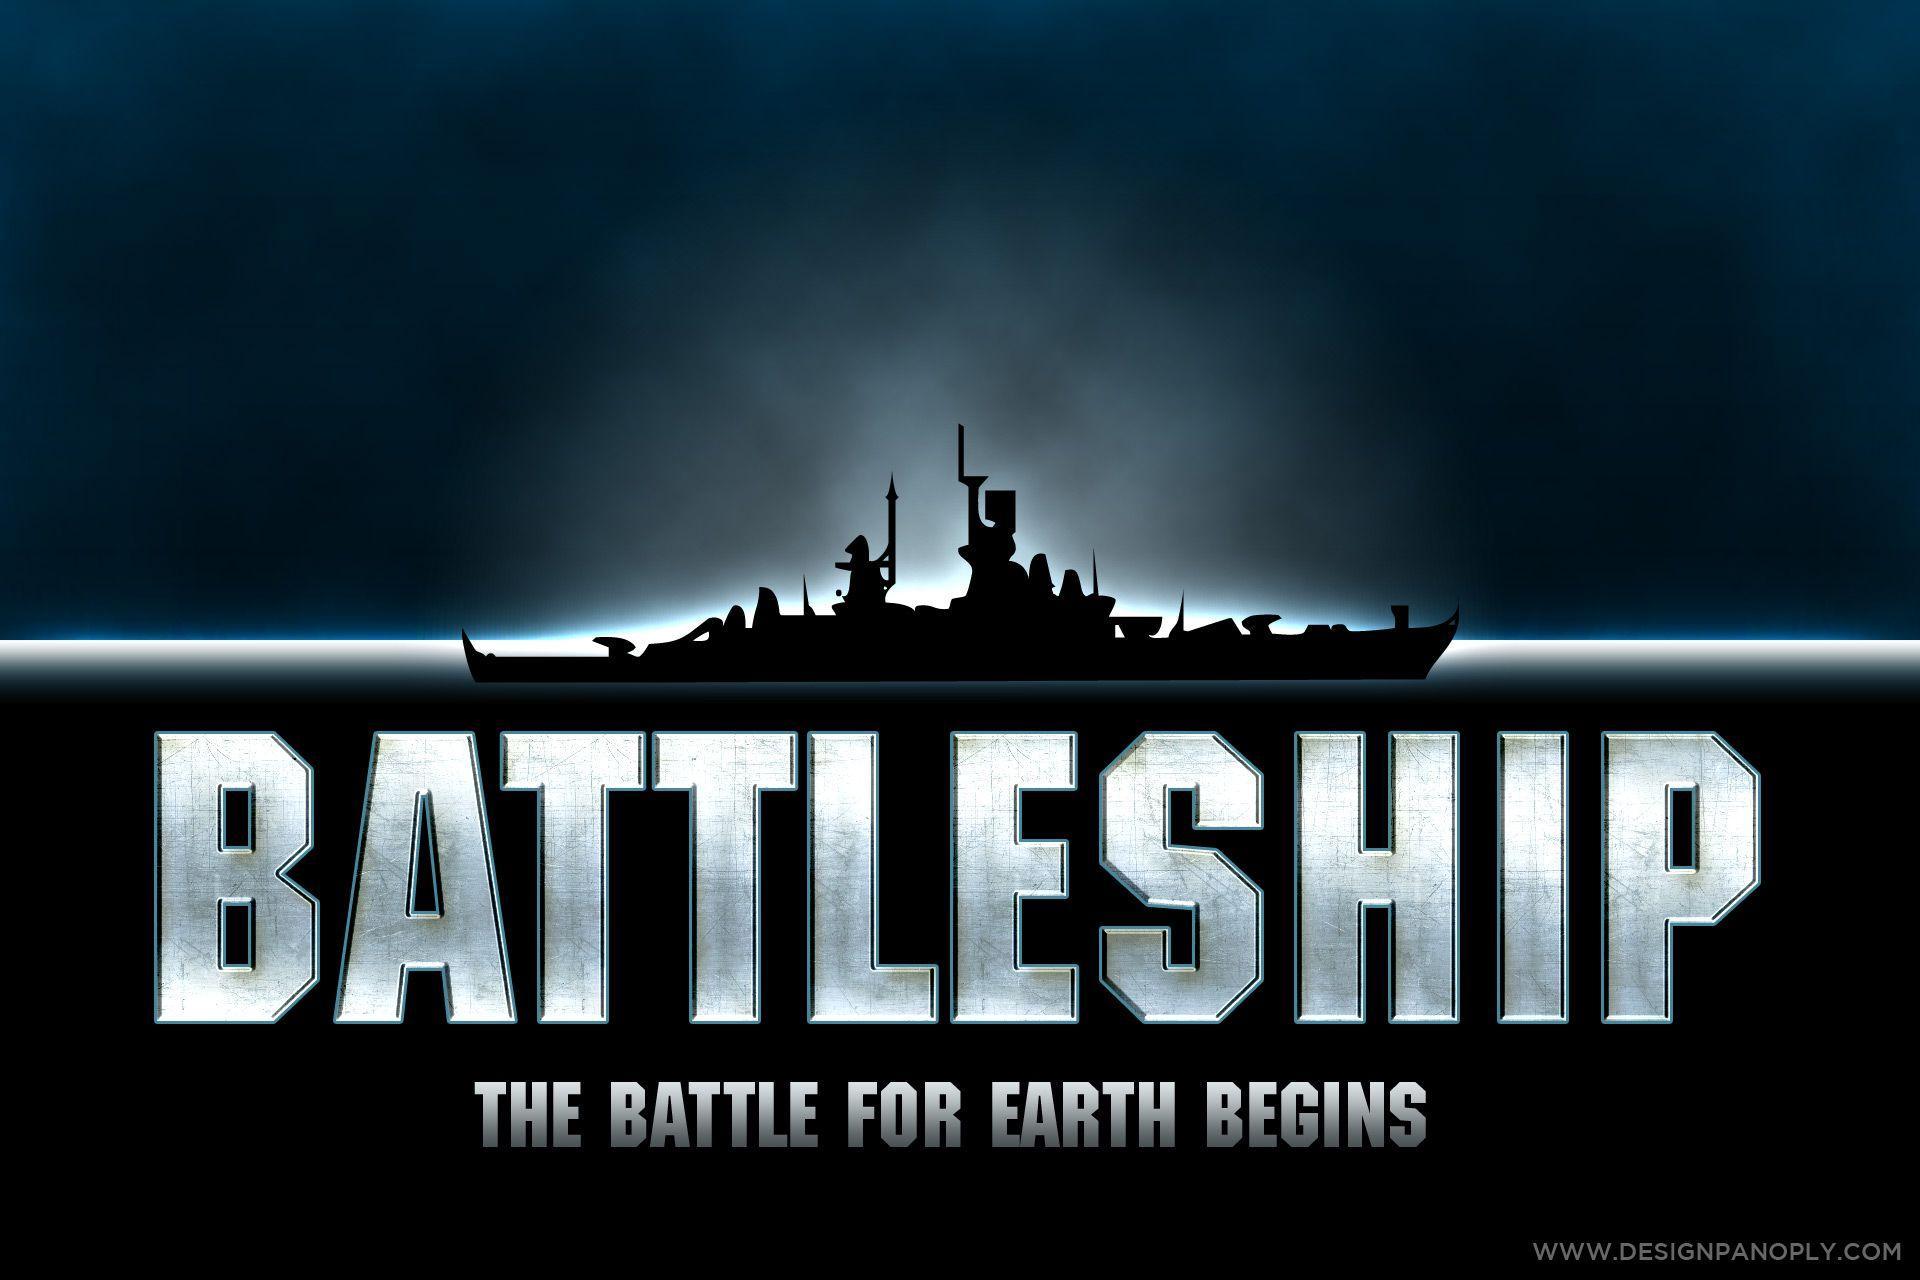 Battleship Logo - Battleship Text Effect Using Photohop Layer Styles